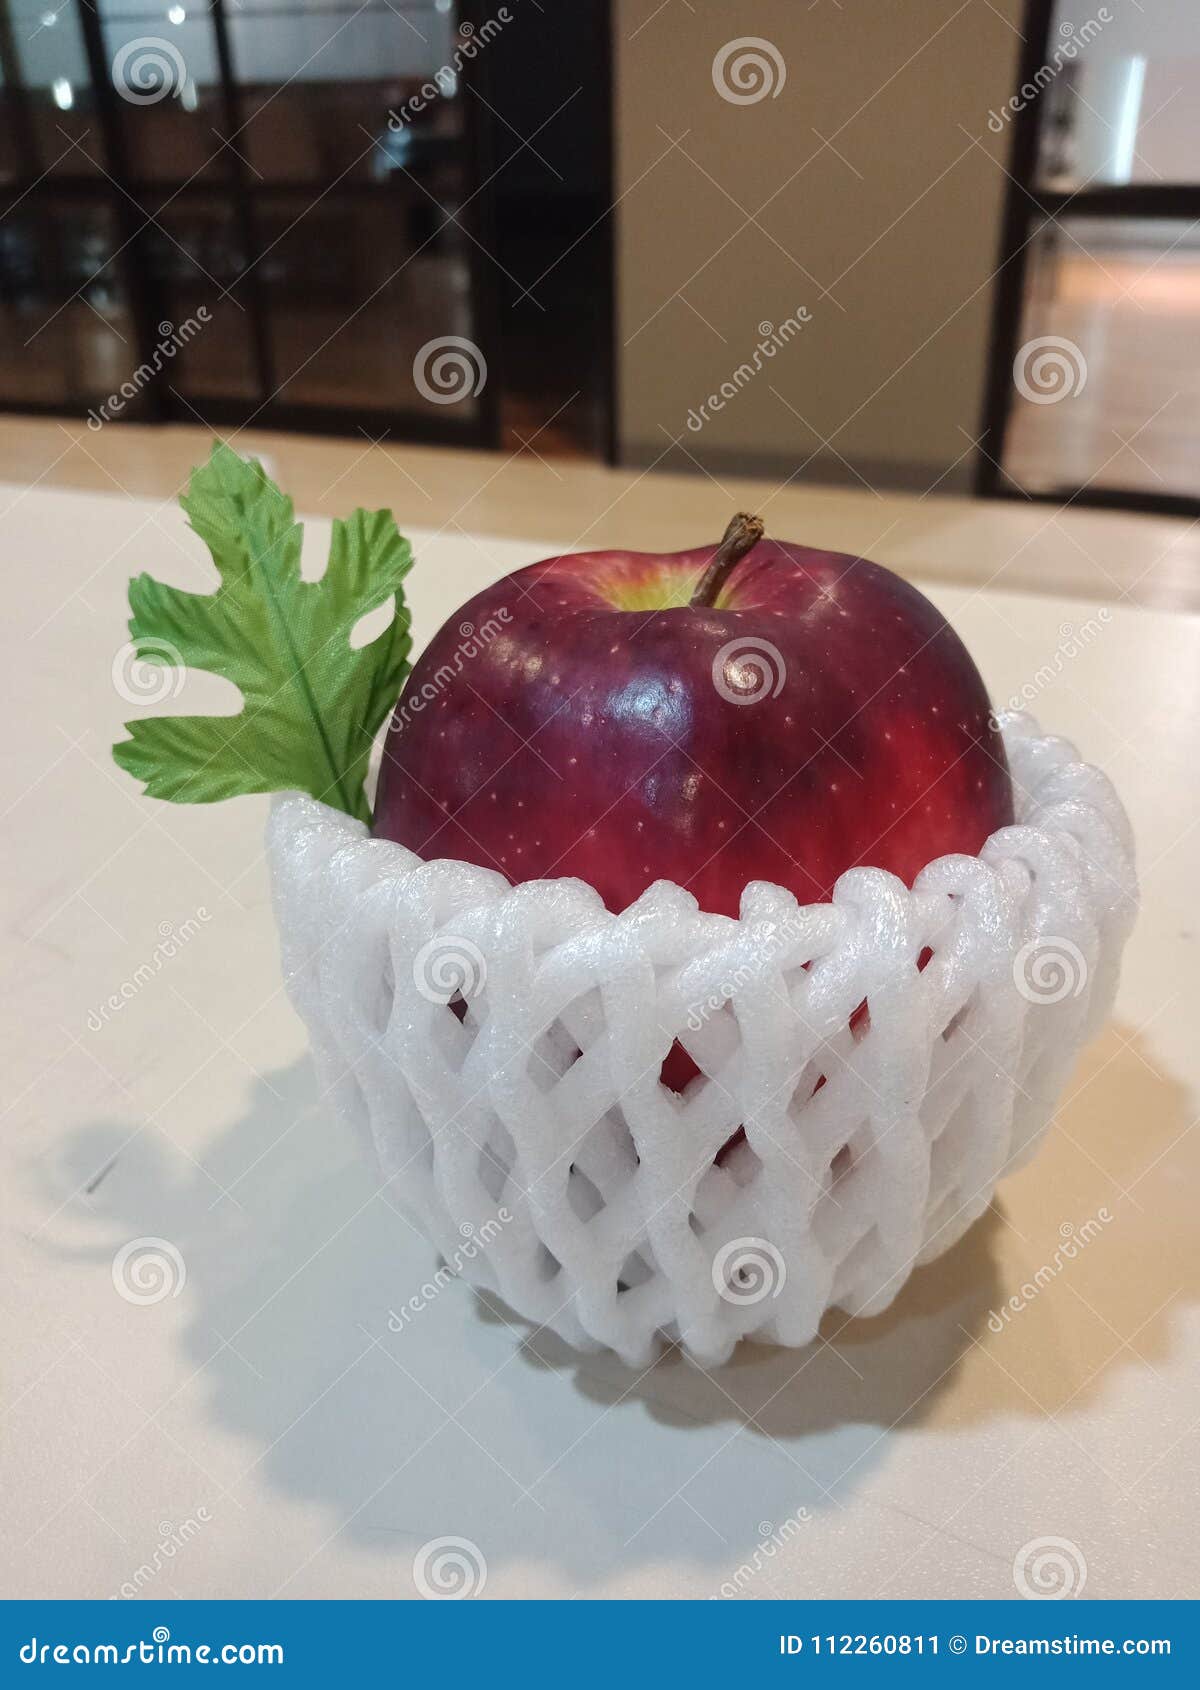 red apple in kitchen